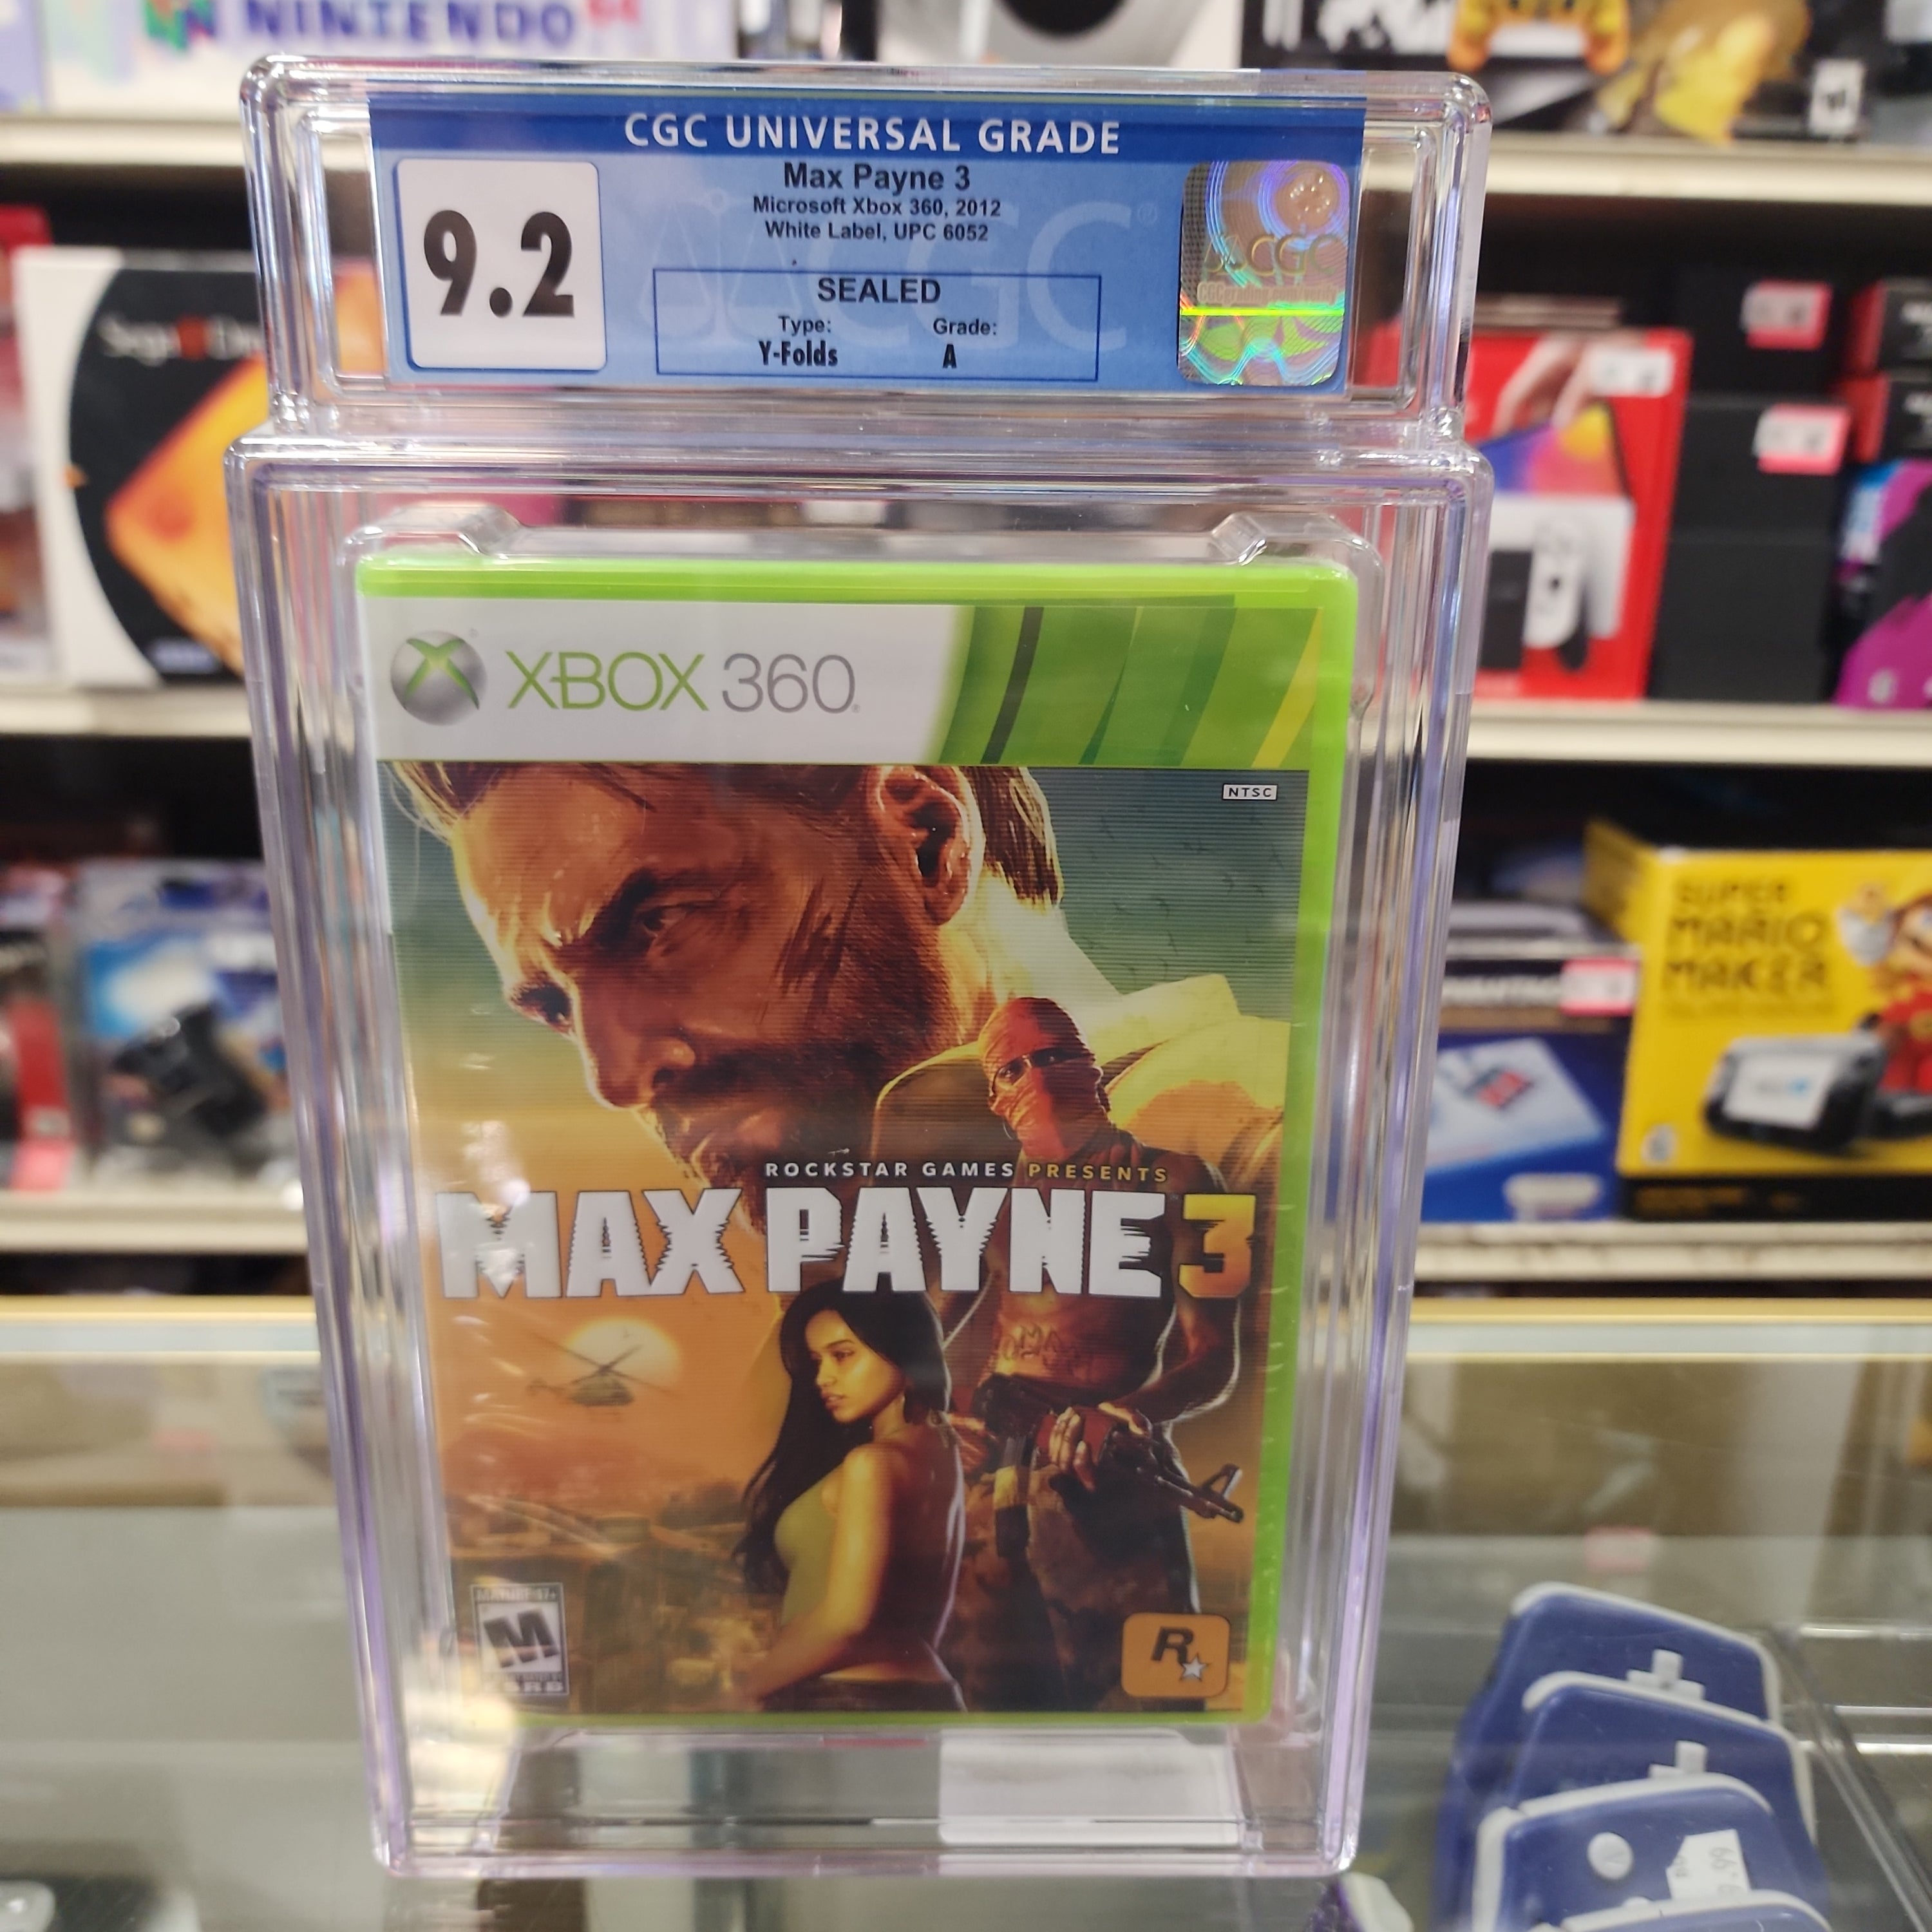 MAX PAYNE - LS Games